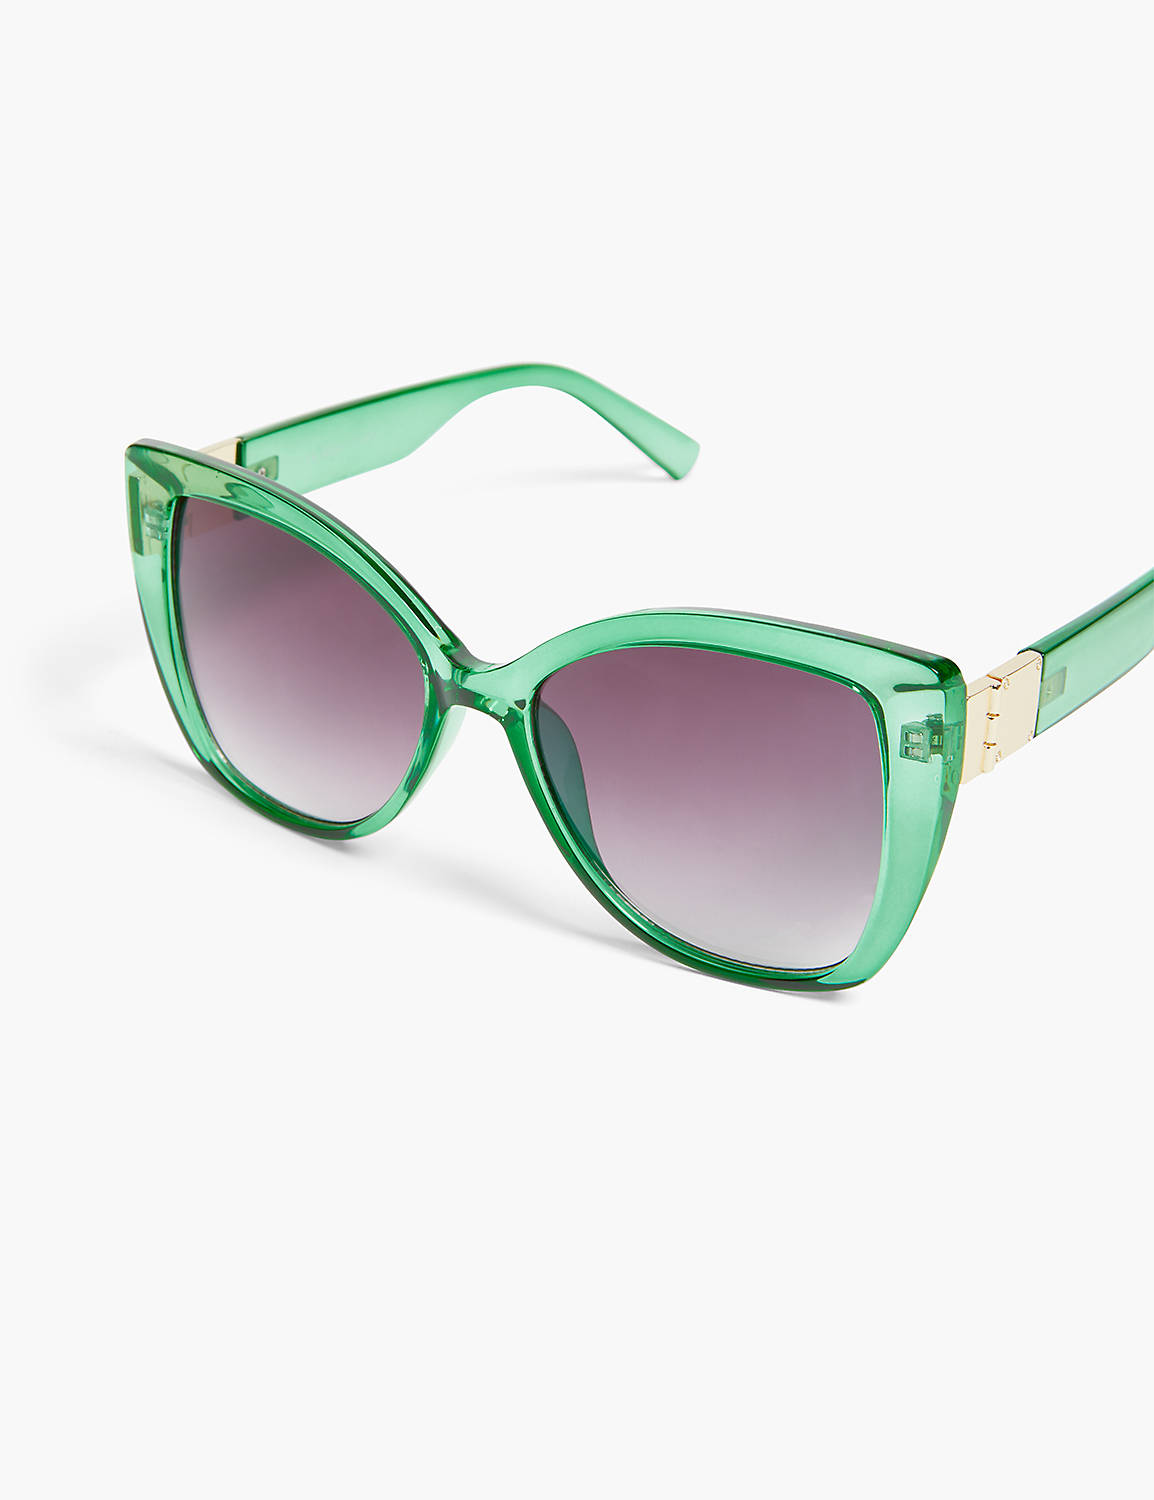 Irish Green Jelly Cat Eye Sunglasse Product Image 1